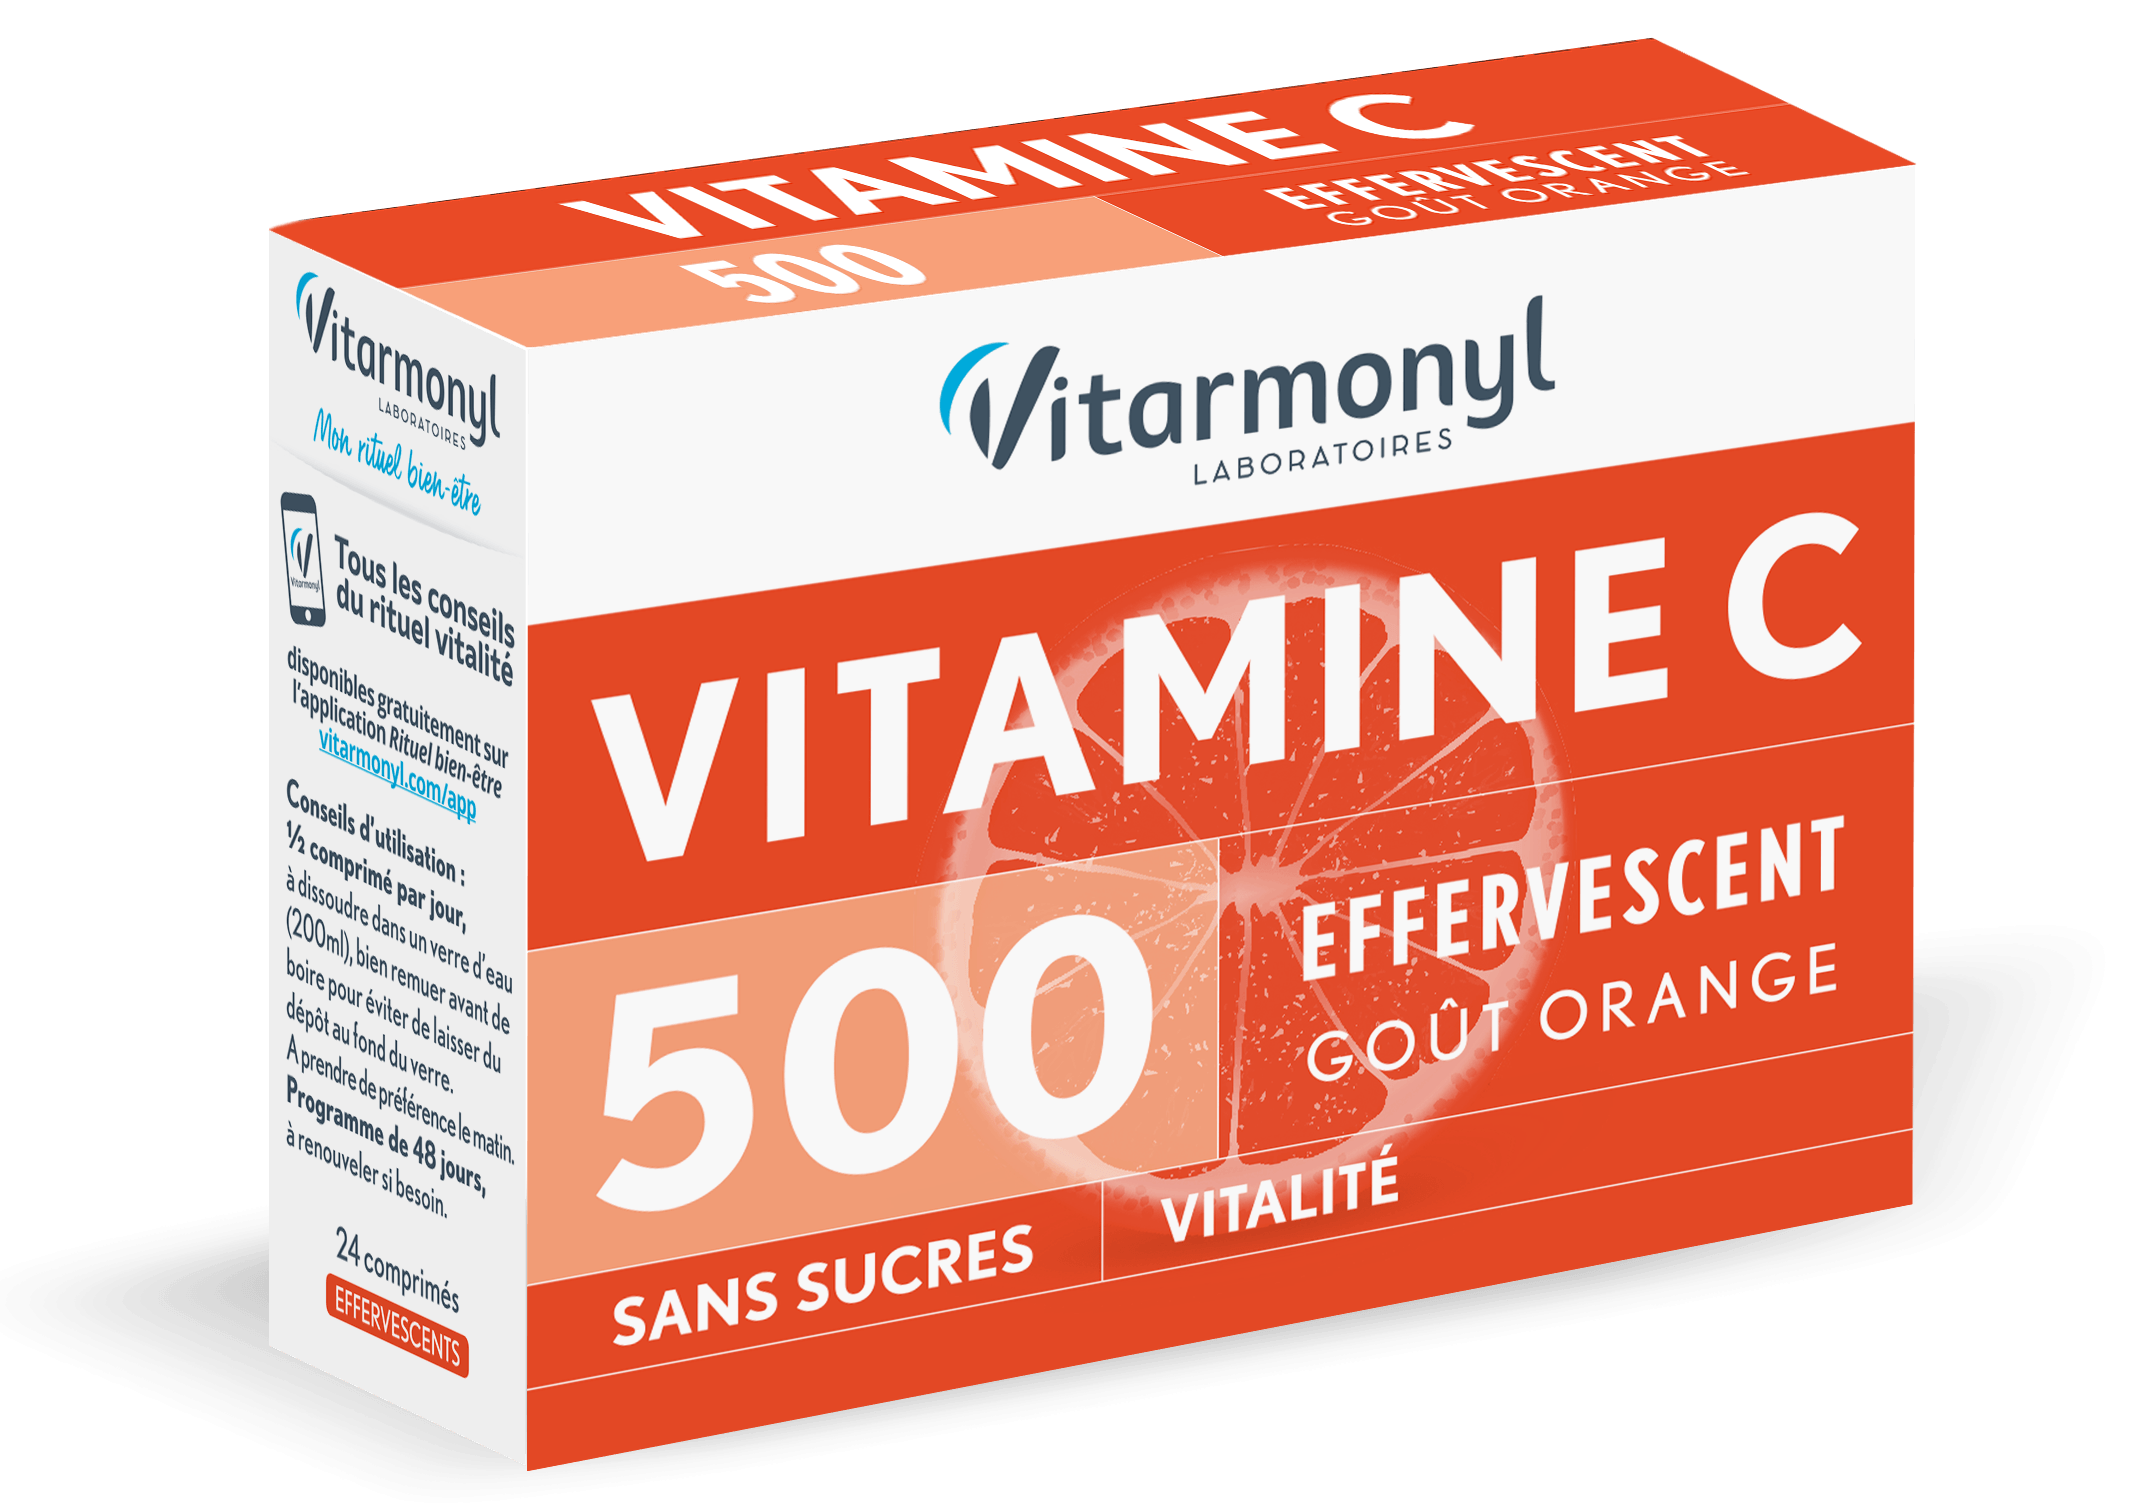 Image Vitamine C 500 – Effervescent